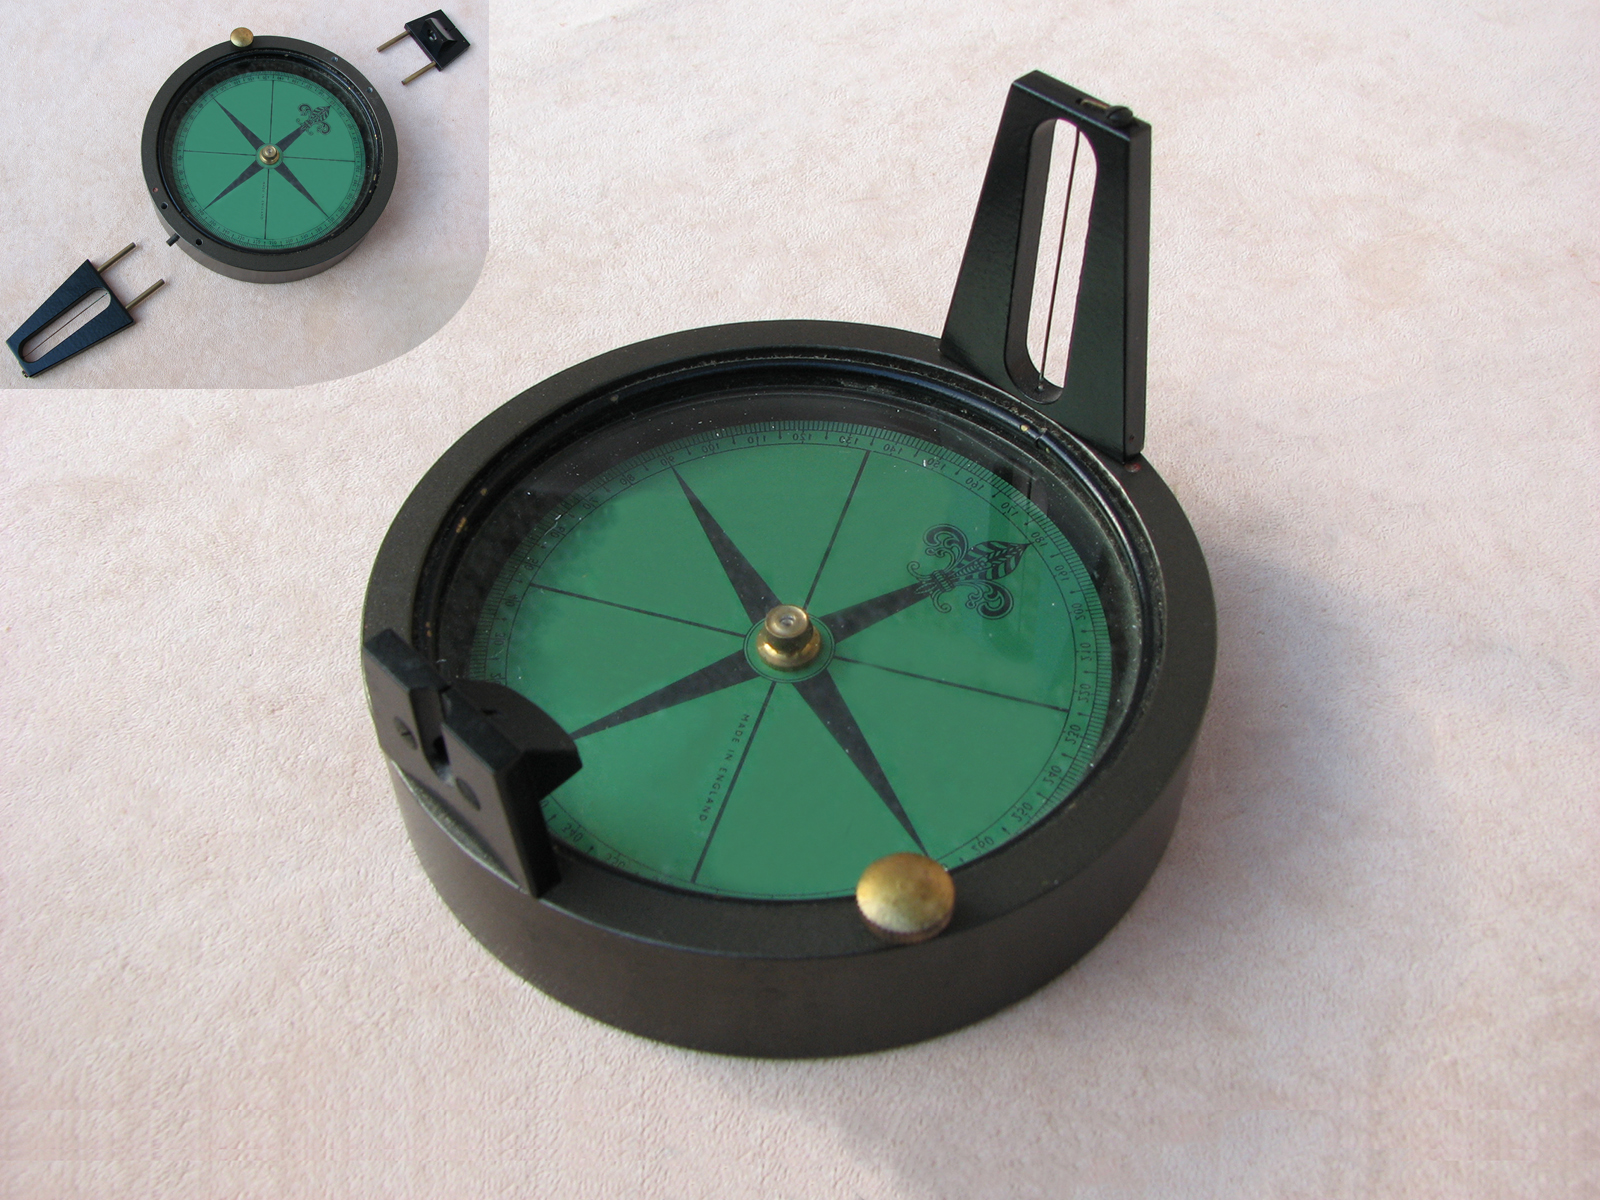 1970's Francis Barker educational prismatic compass